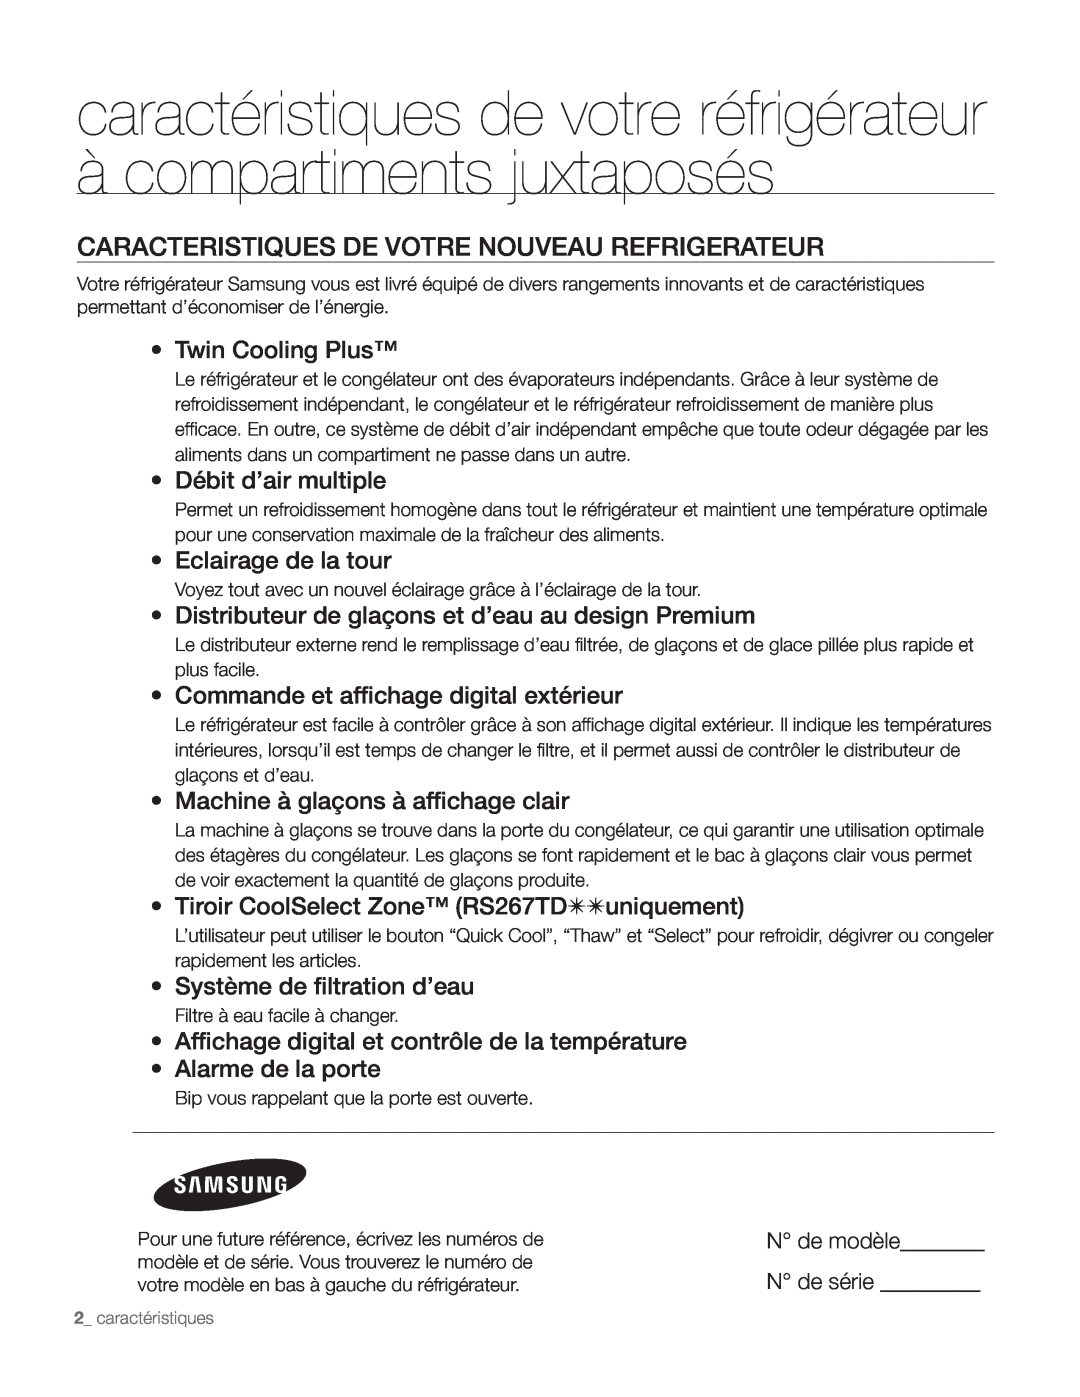 Samsung DA68-01890Q user manual Caracteristiques De Votre Nouveau Refrigerateur 